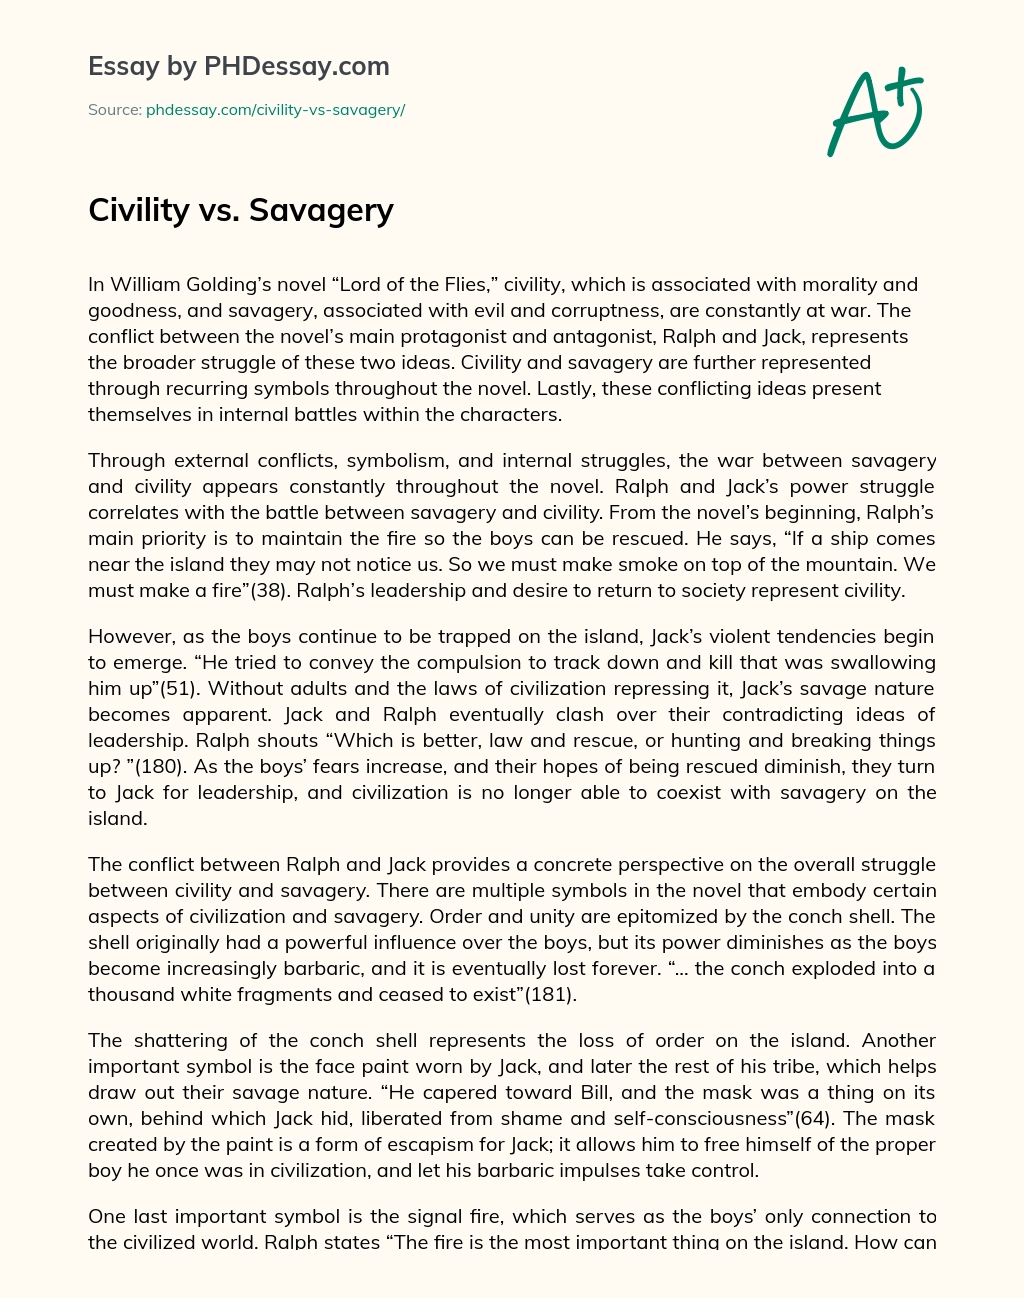 Civility vs. Savagery essay